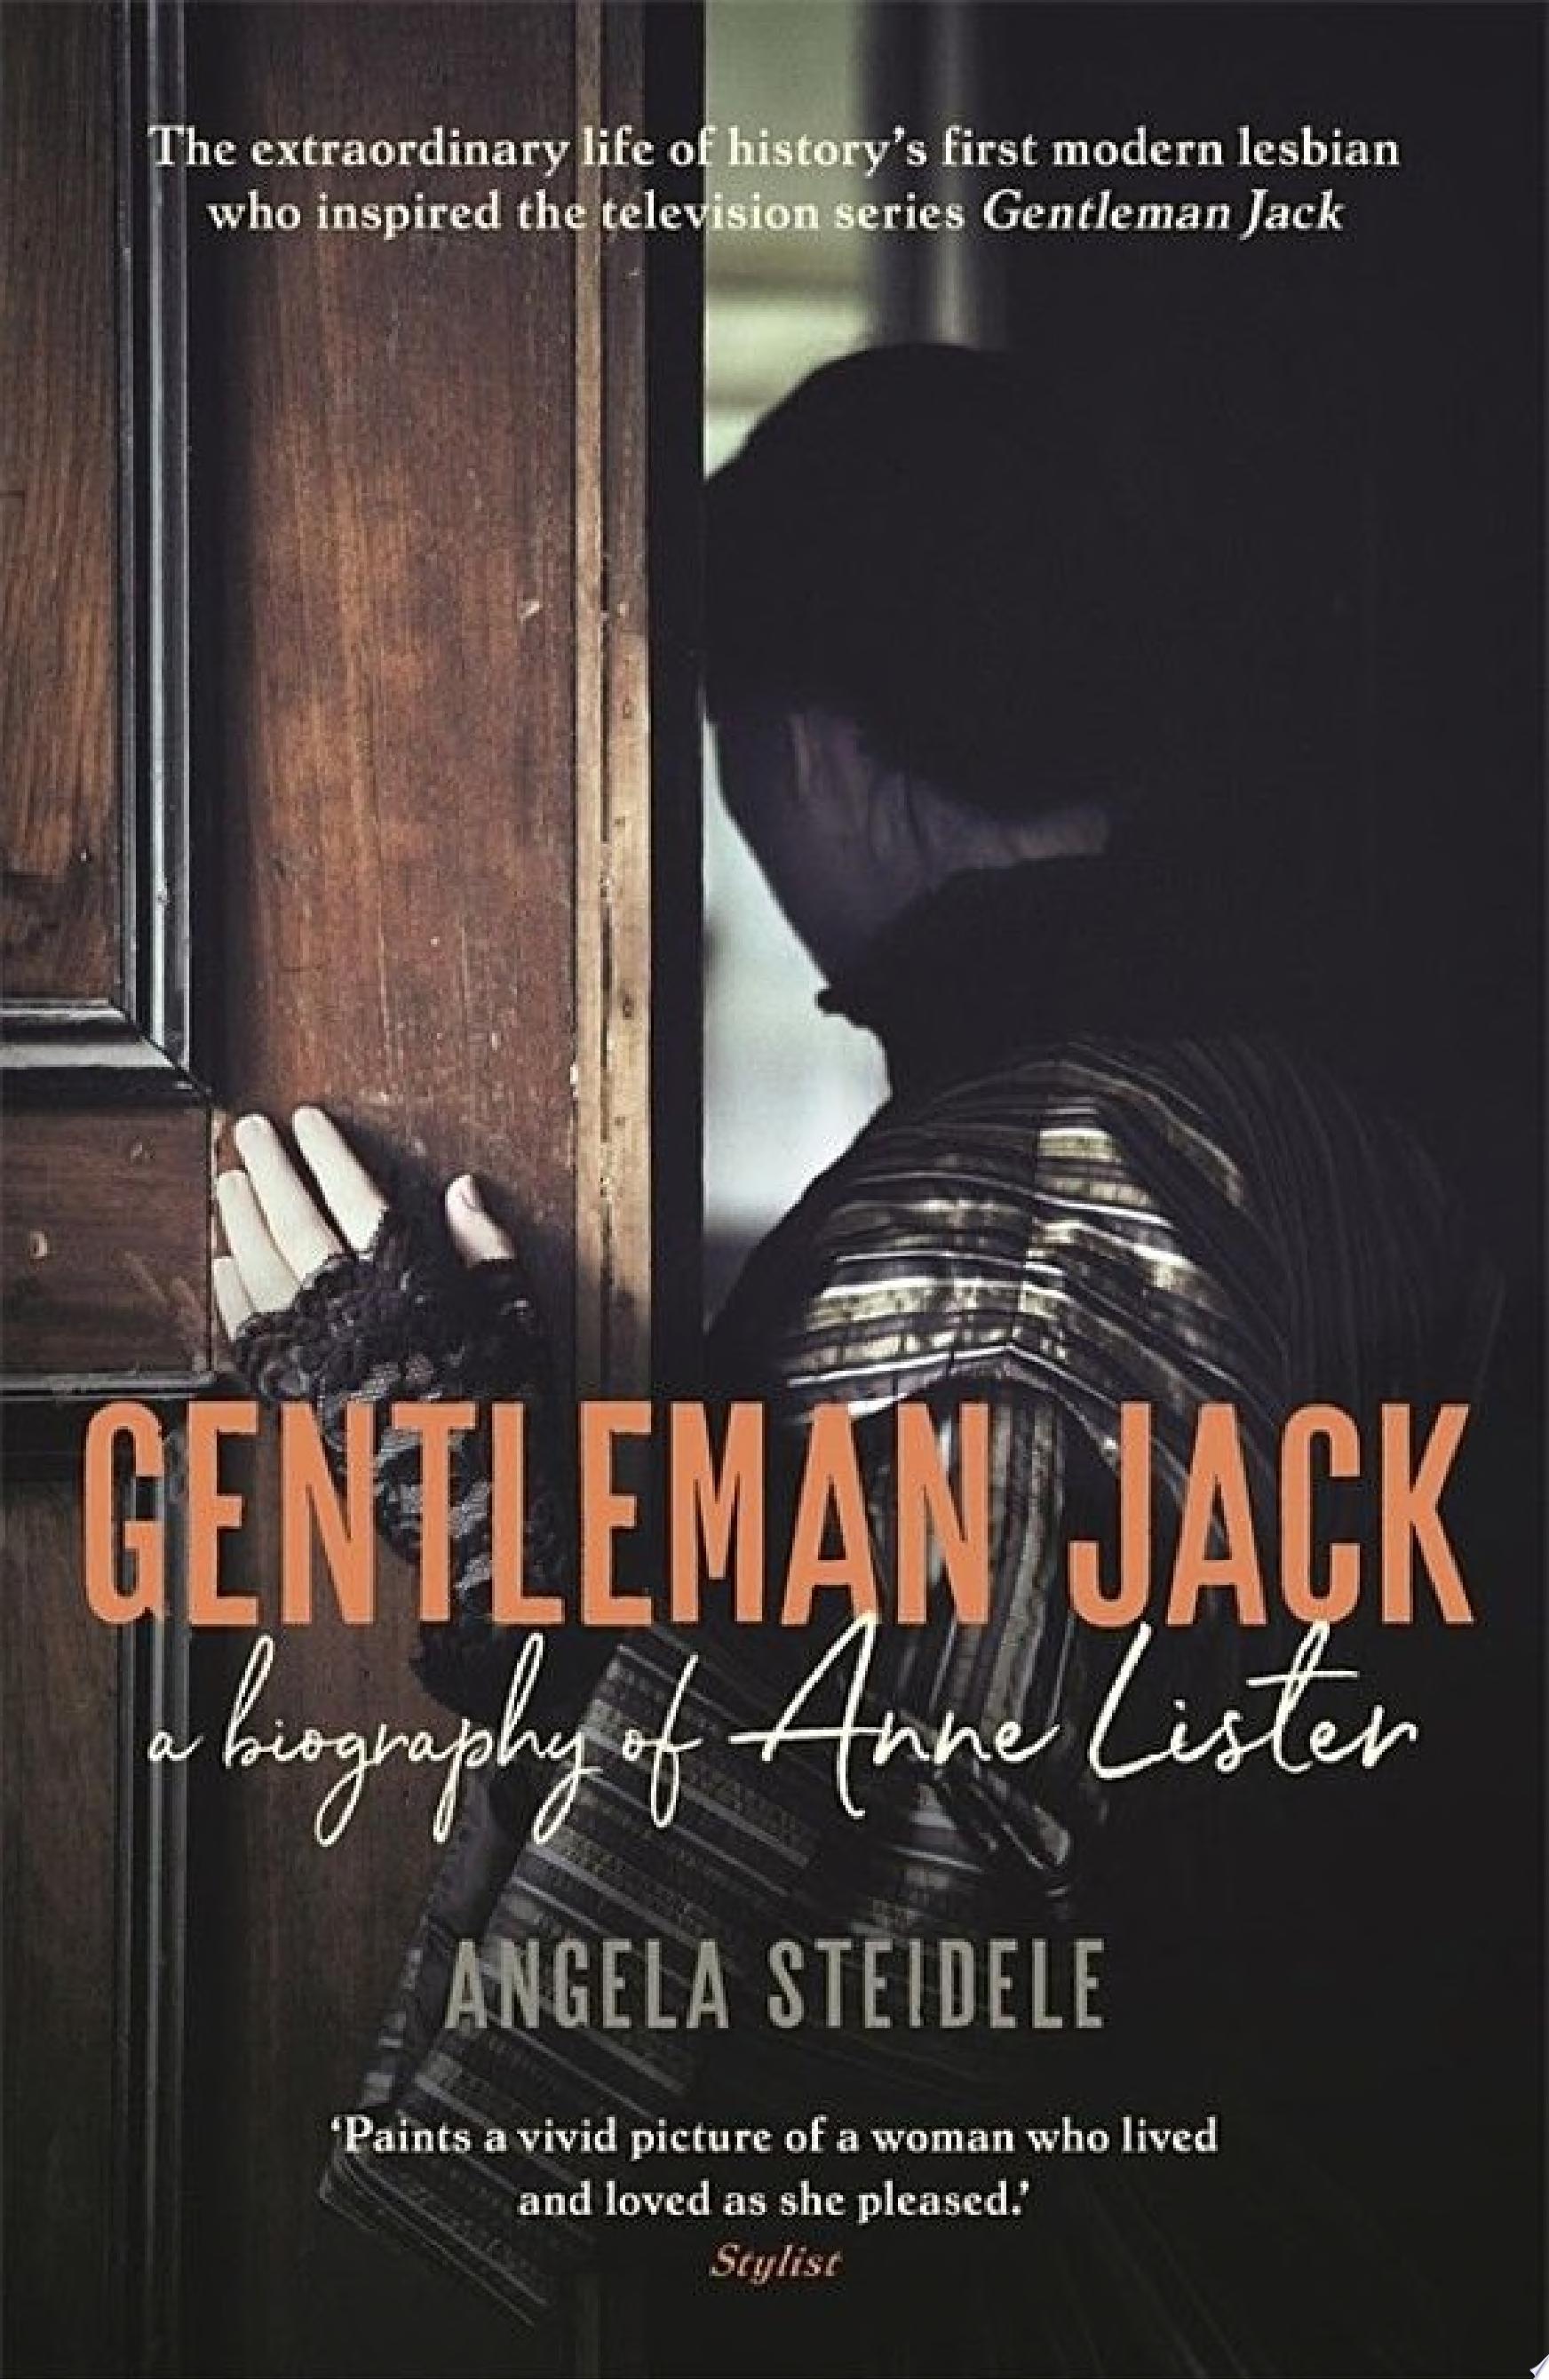 Image for "Gentleman Jack"